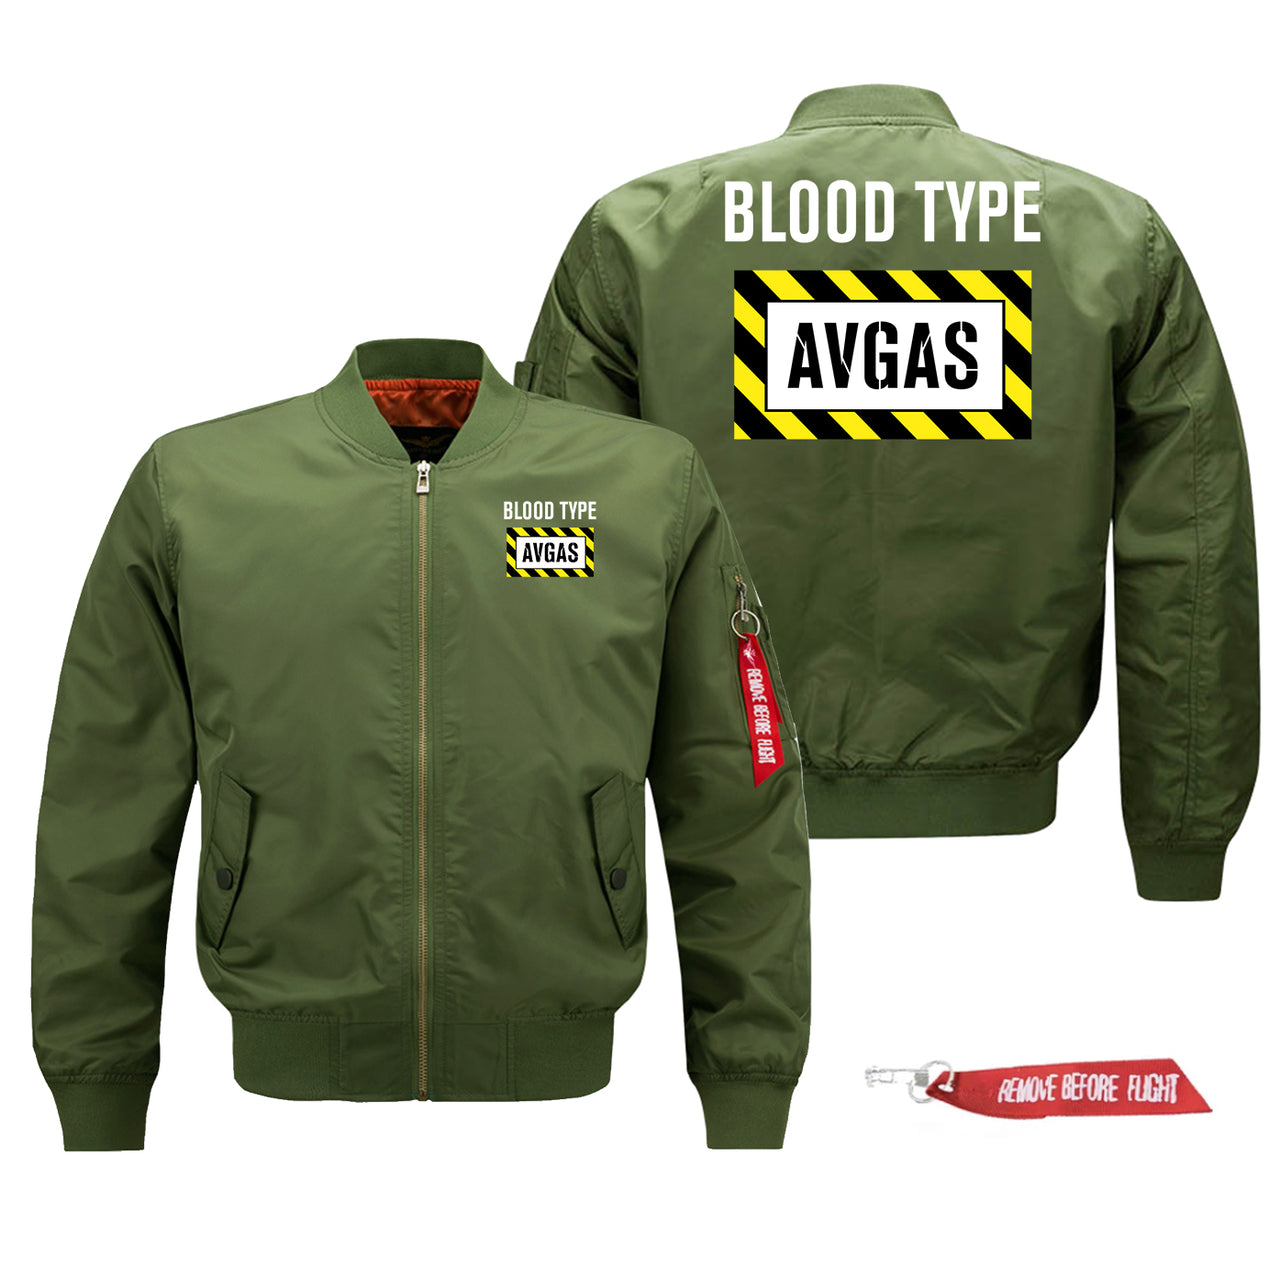 Blood Type AVGAS Designed Pilot Jackets (Customizable)